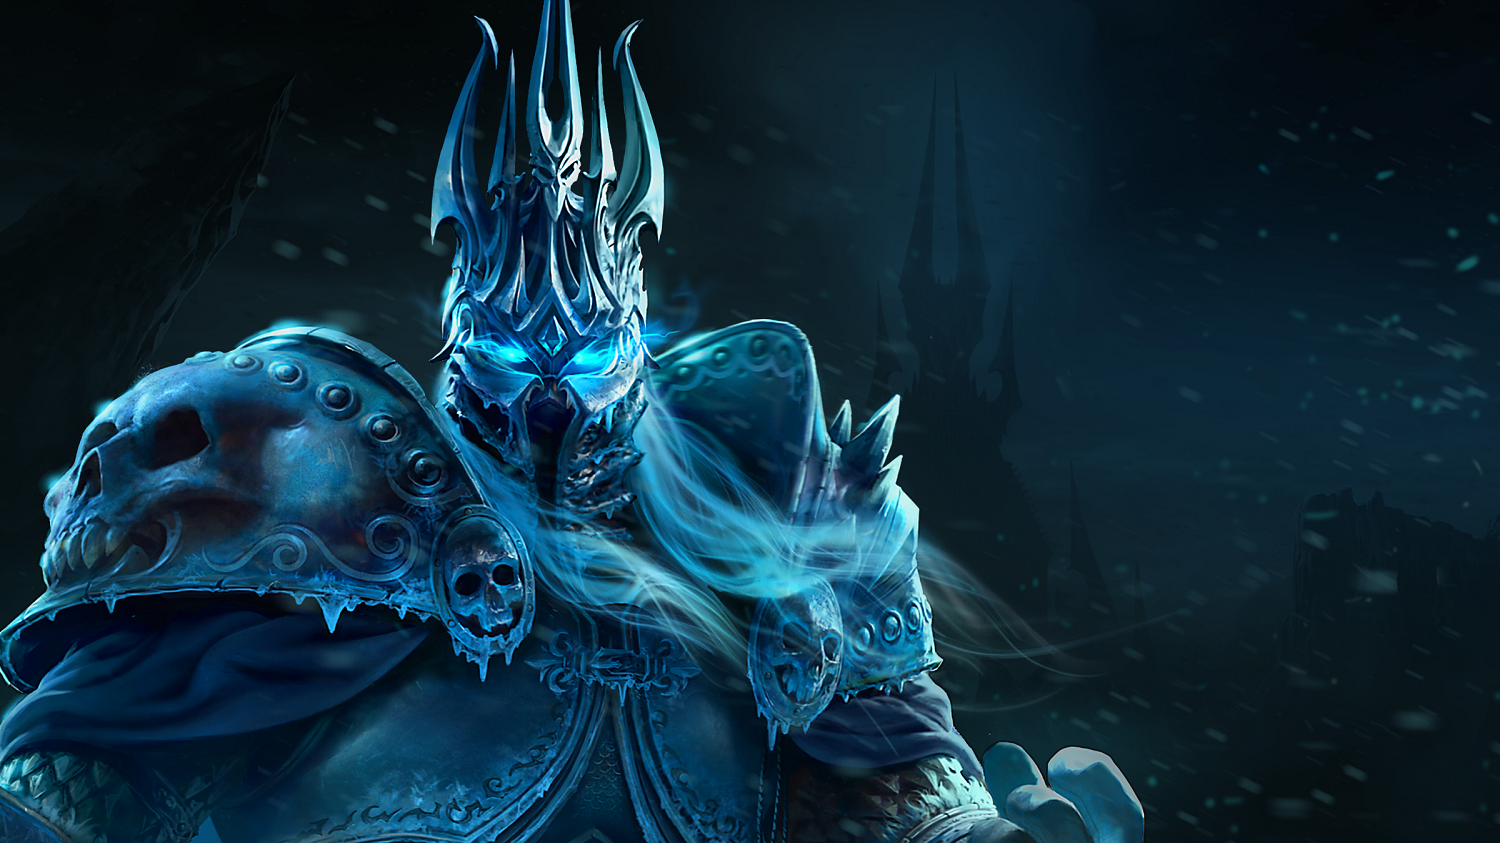 World of Warcraft já tem data para a expansão Wrath of the Lich King